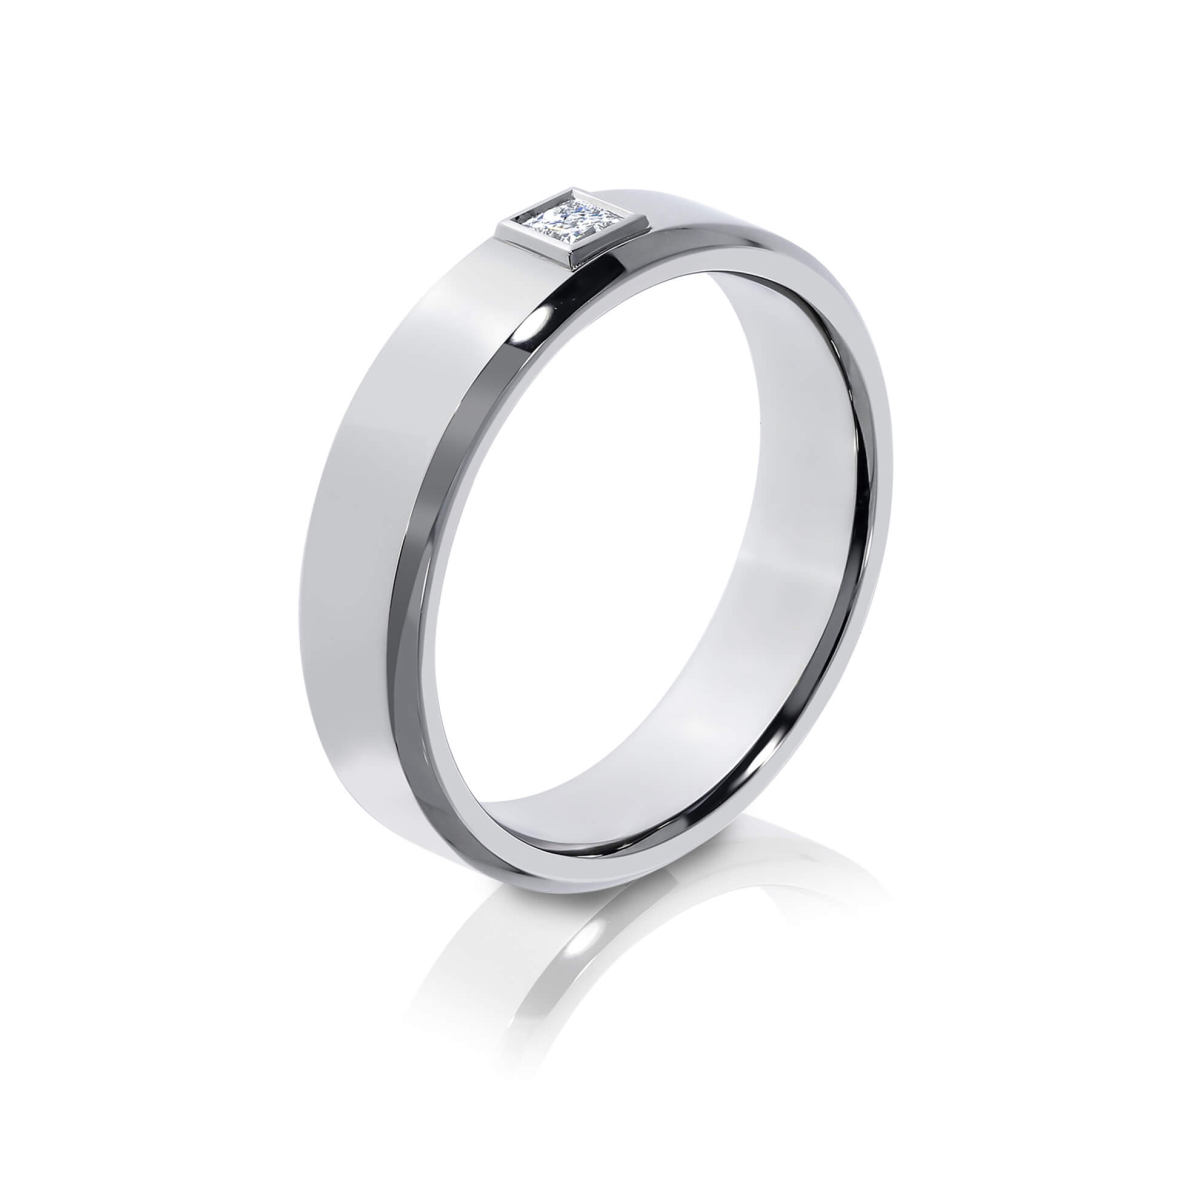 Bevelled Edge Wedding Ring With Bezel Set Princess Cut Diamond